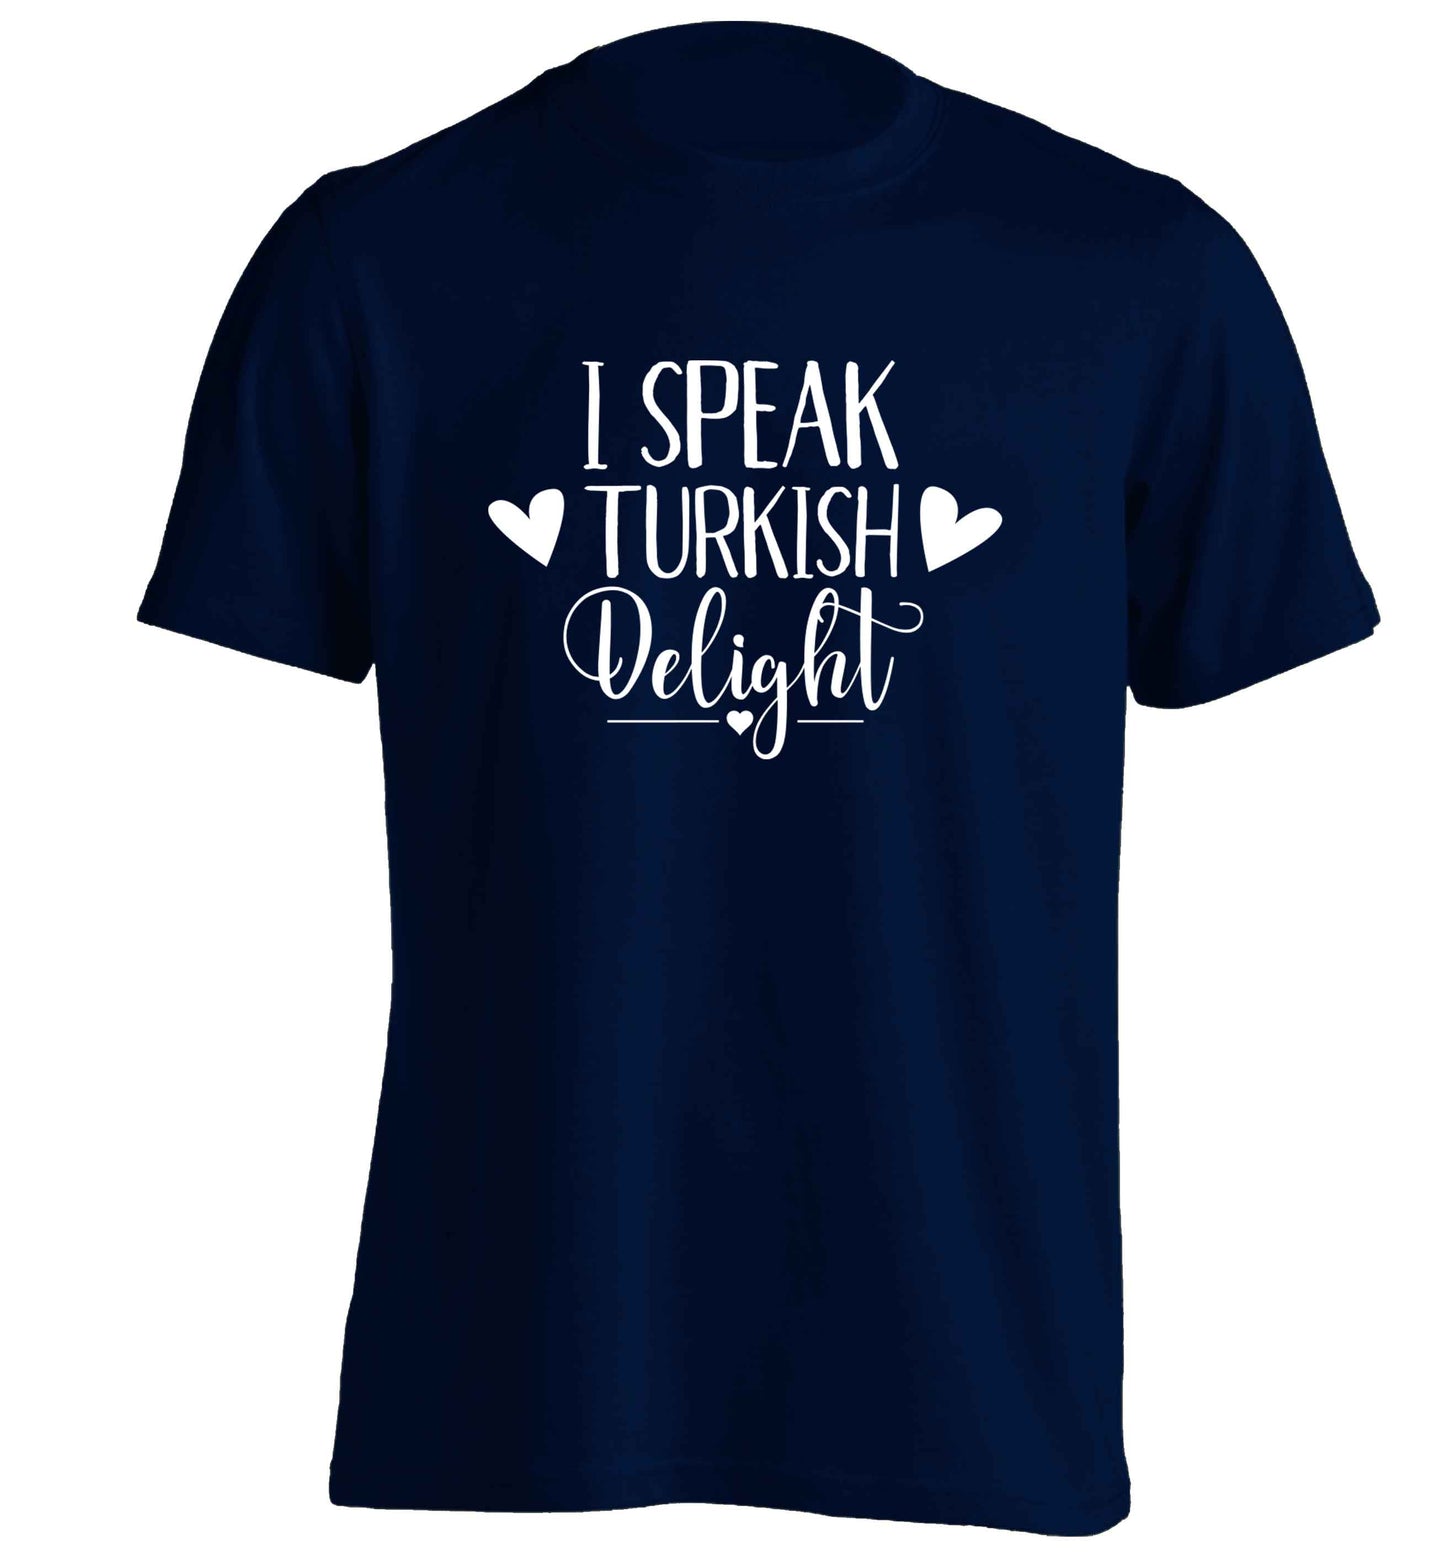 I speak turkish...delight adults unisex navy Tshirt 2XL